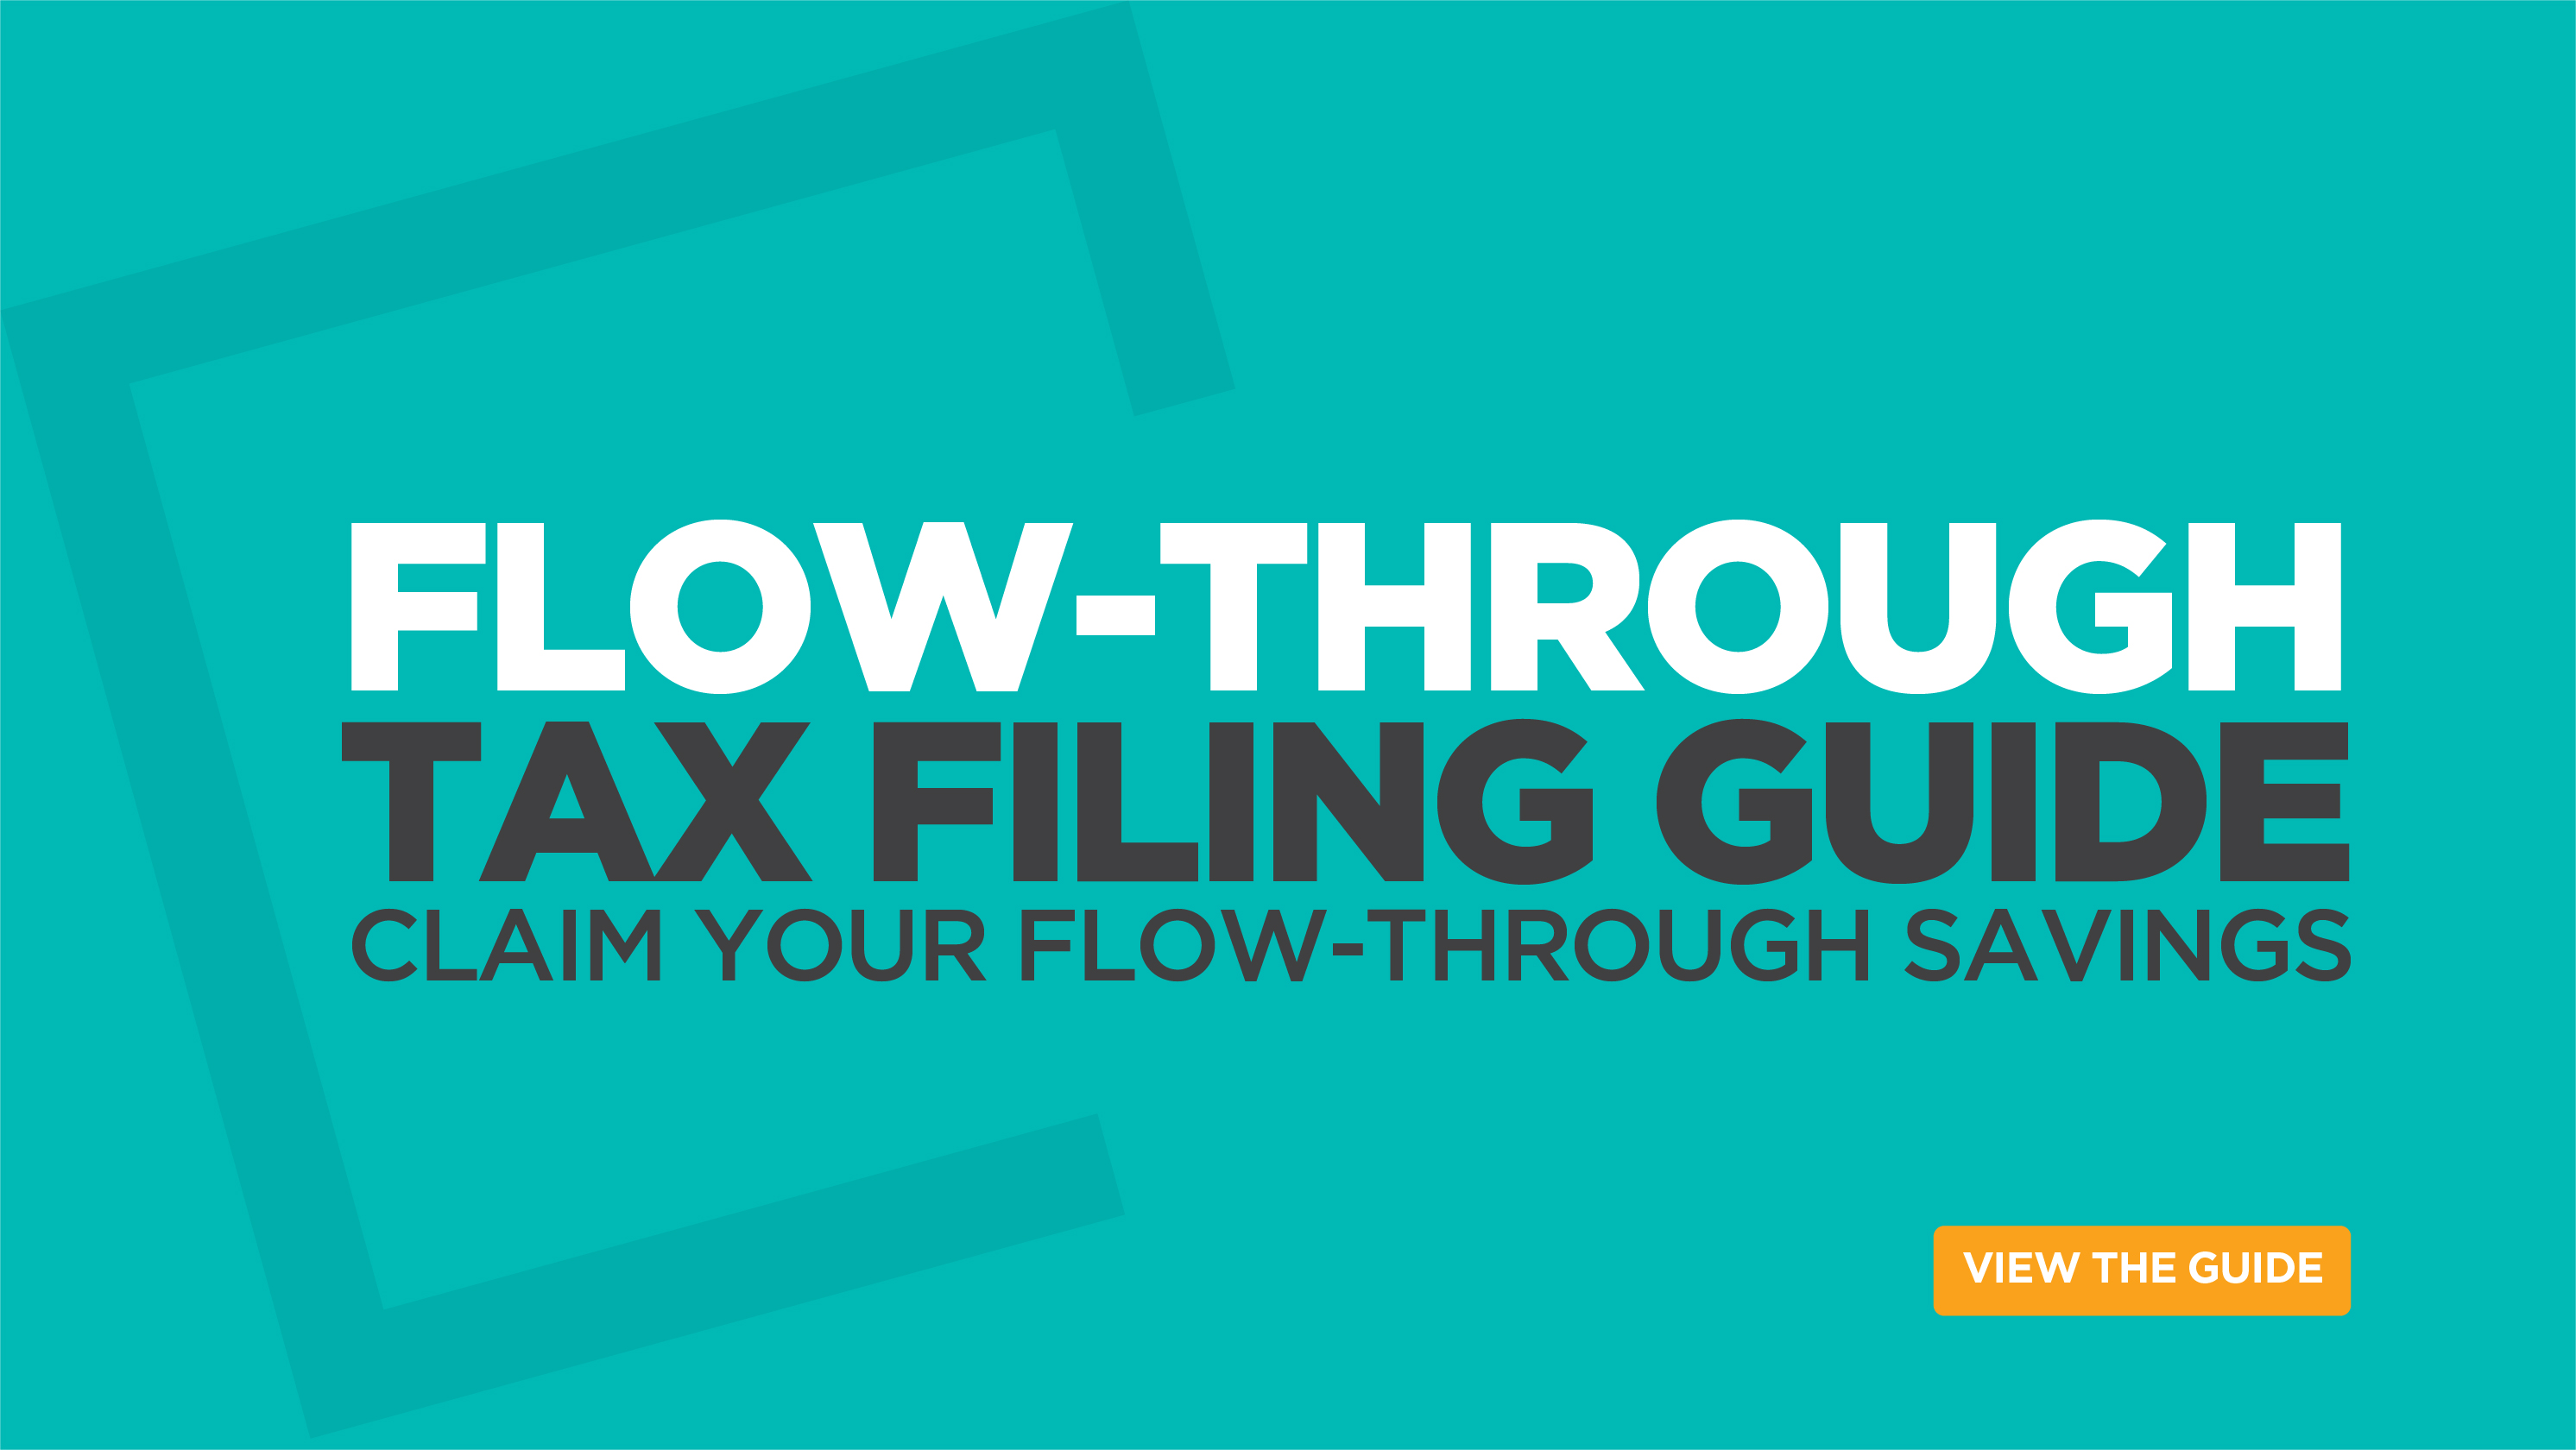 Flow-through Tax Filing Guide